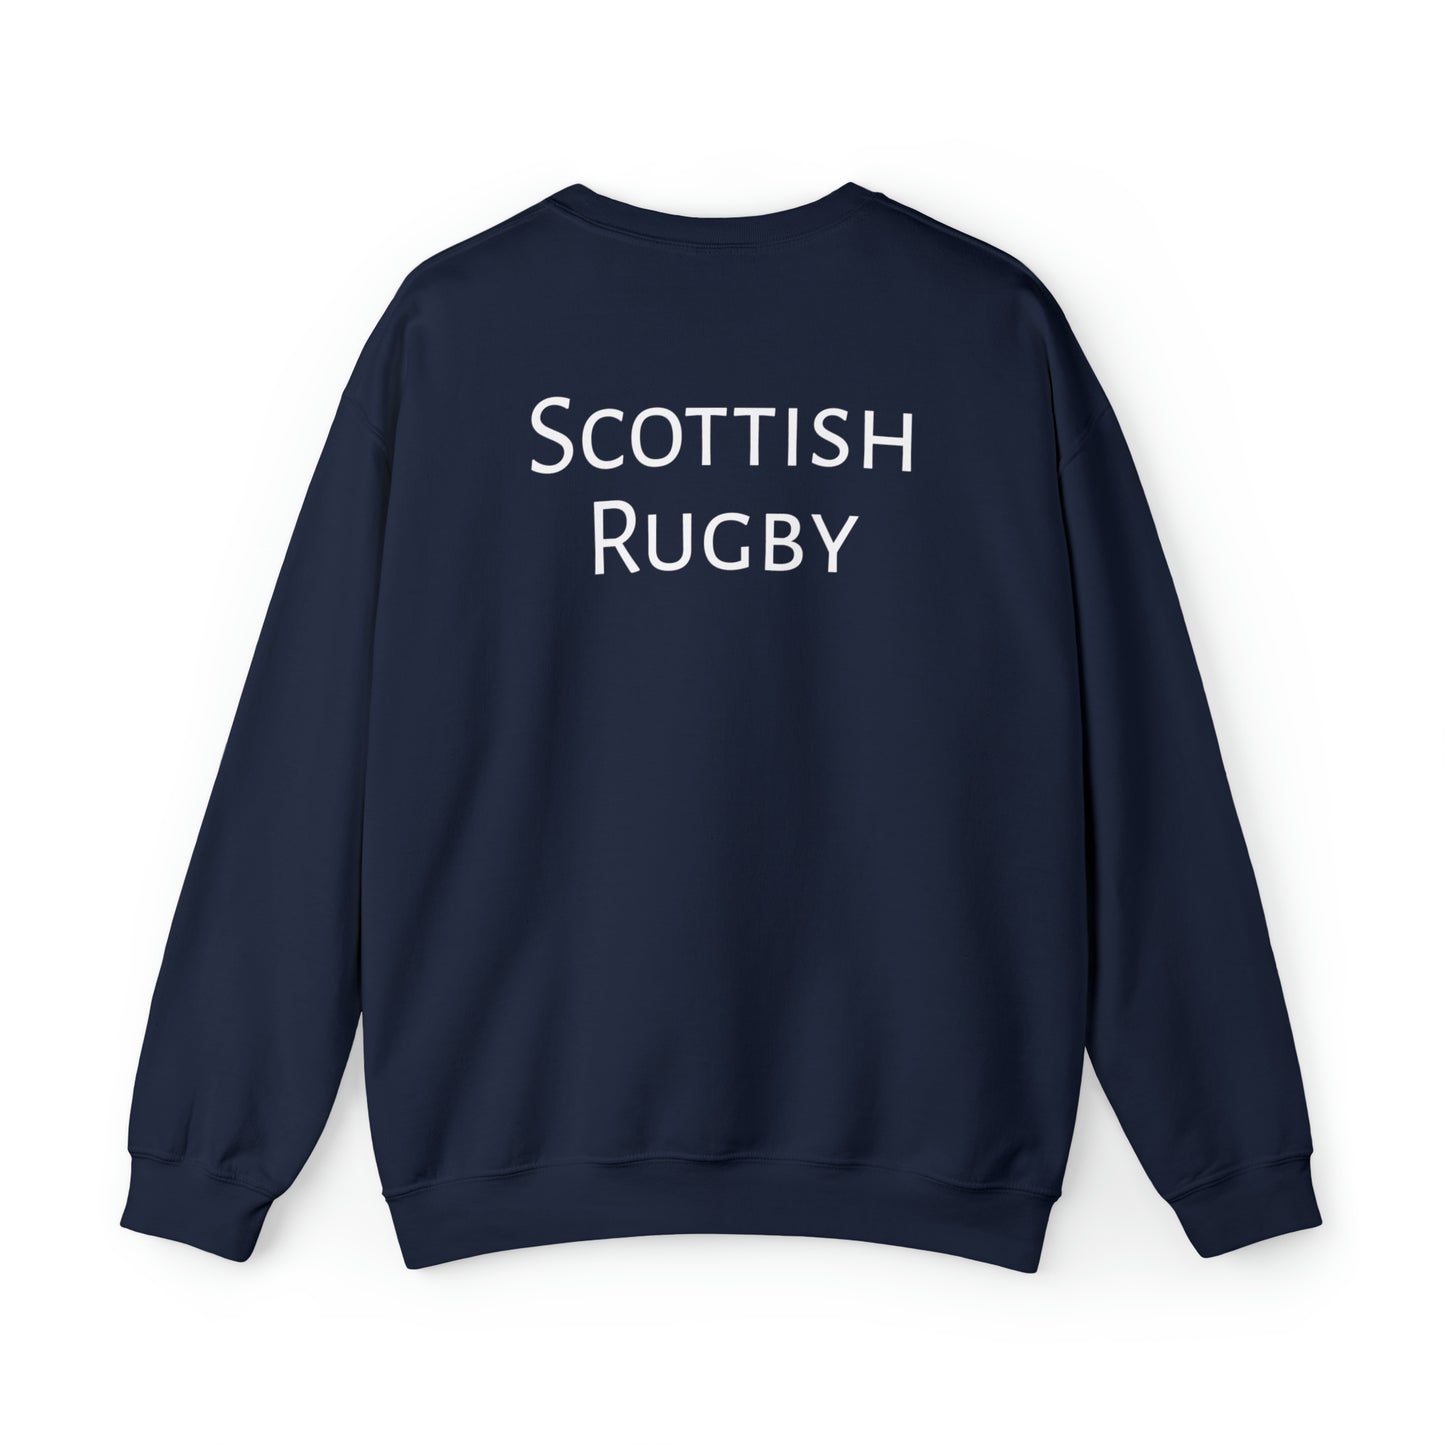 Ready Scotland - dark sweatshirts